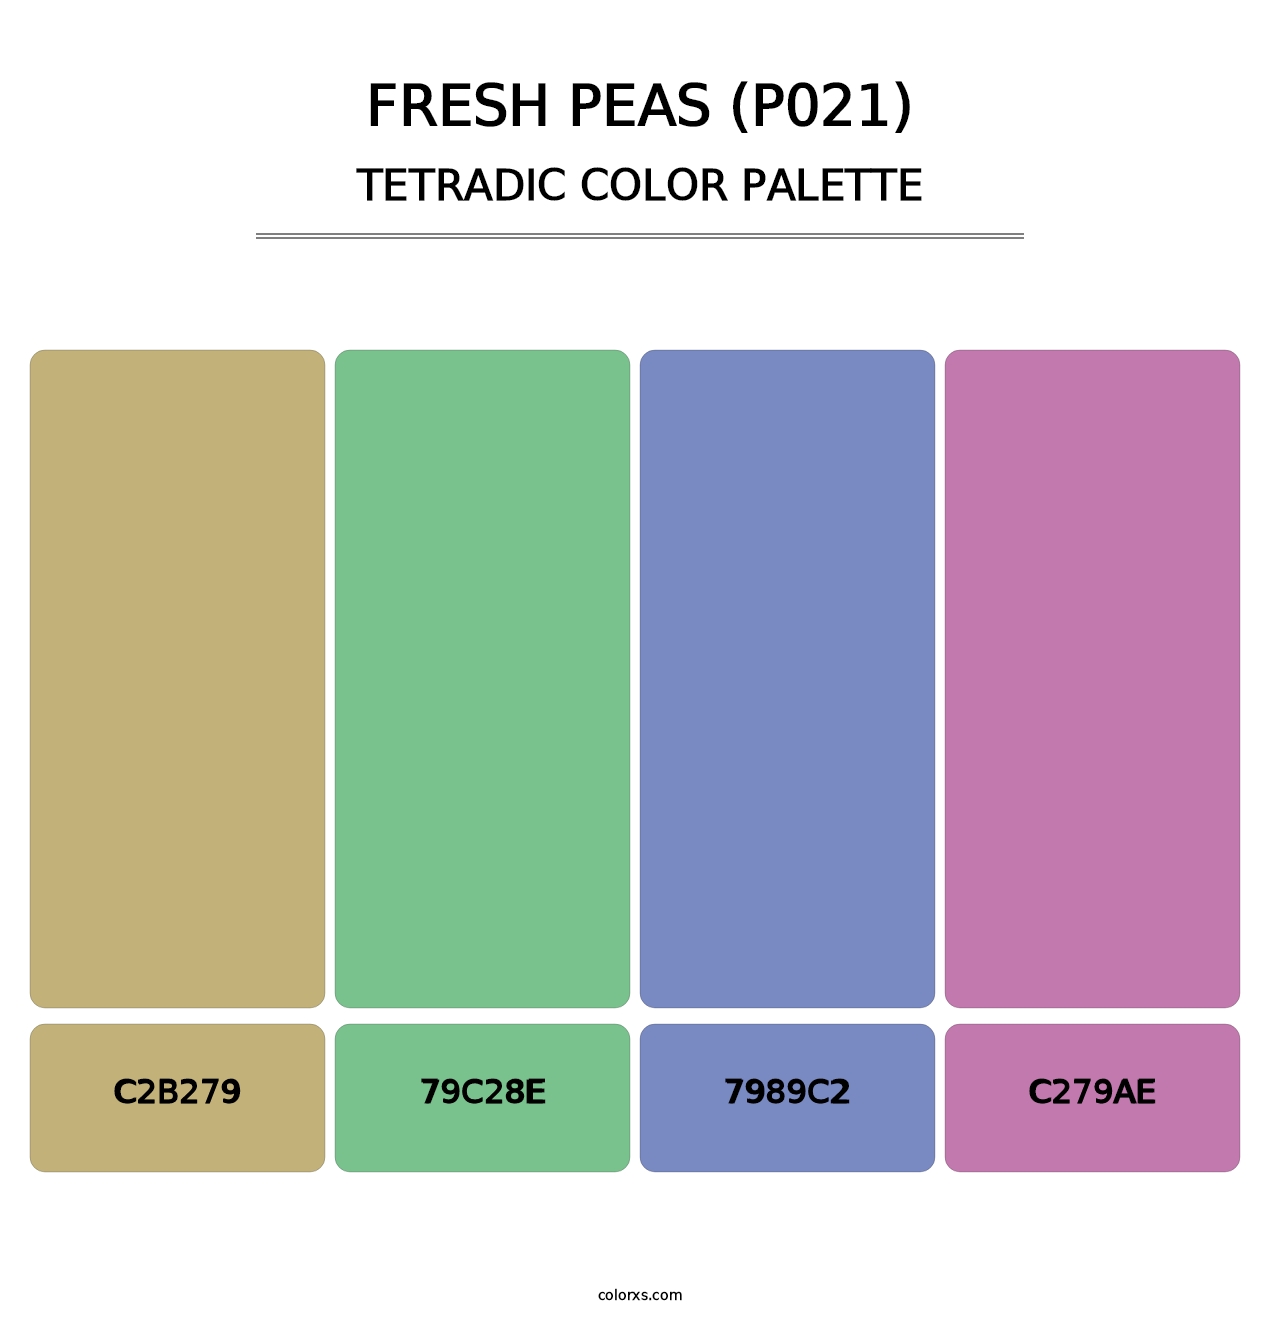 Fresh Peas (P021) - Tetradic Color Palette